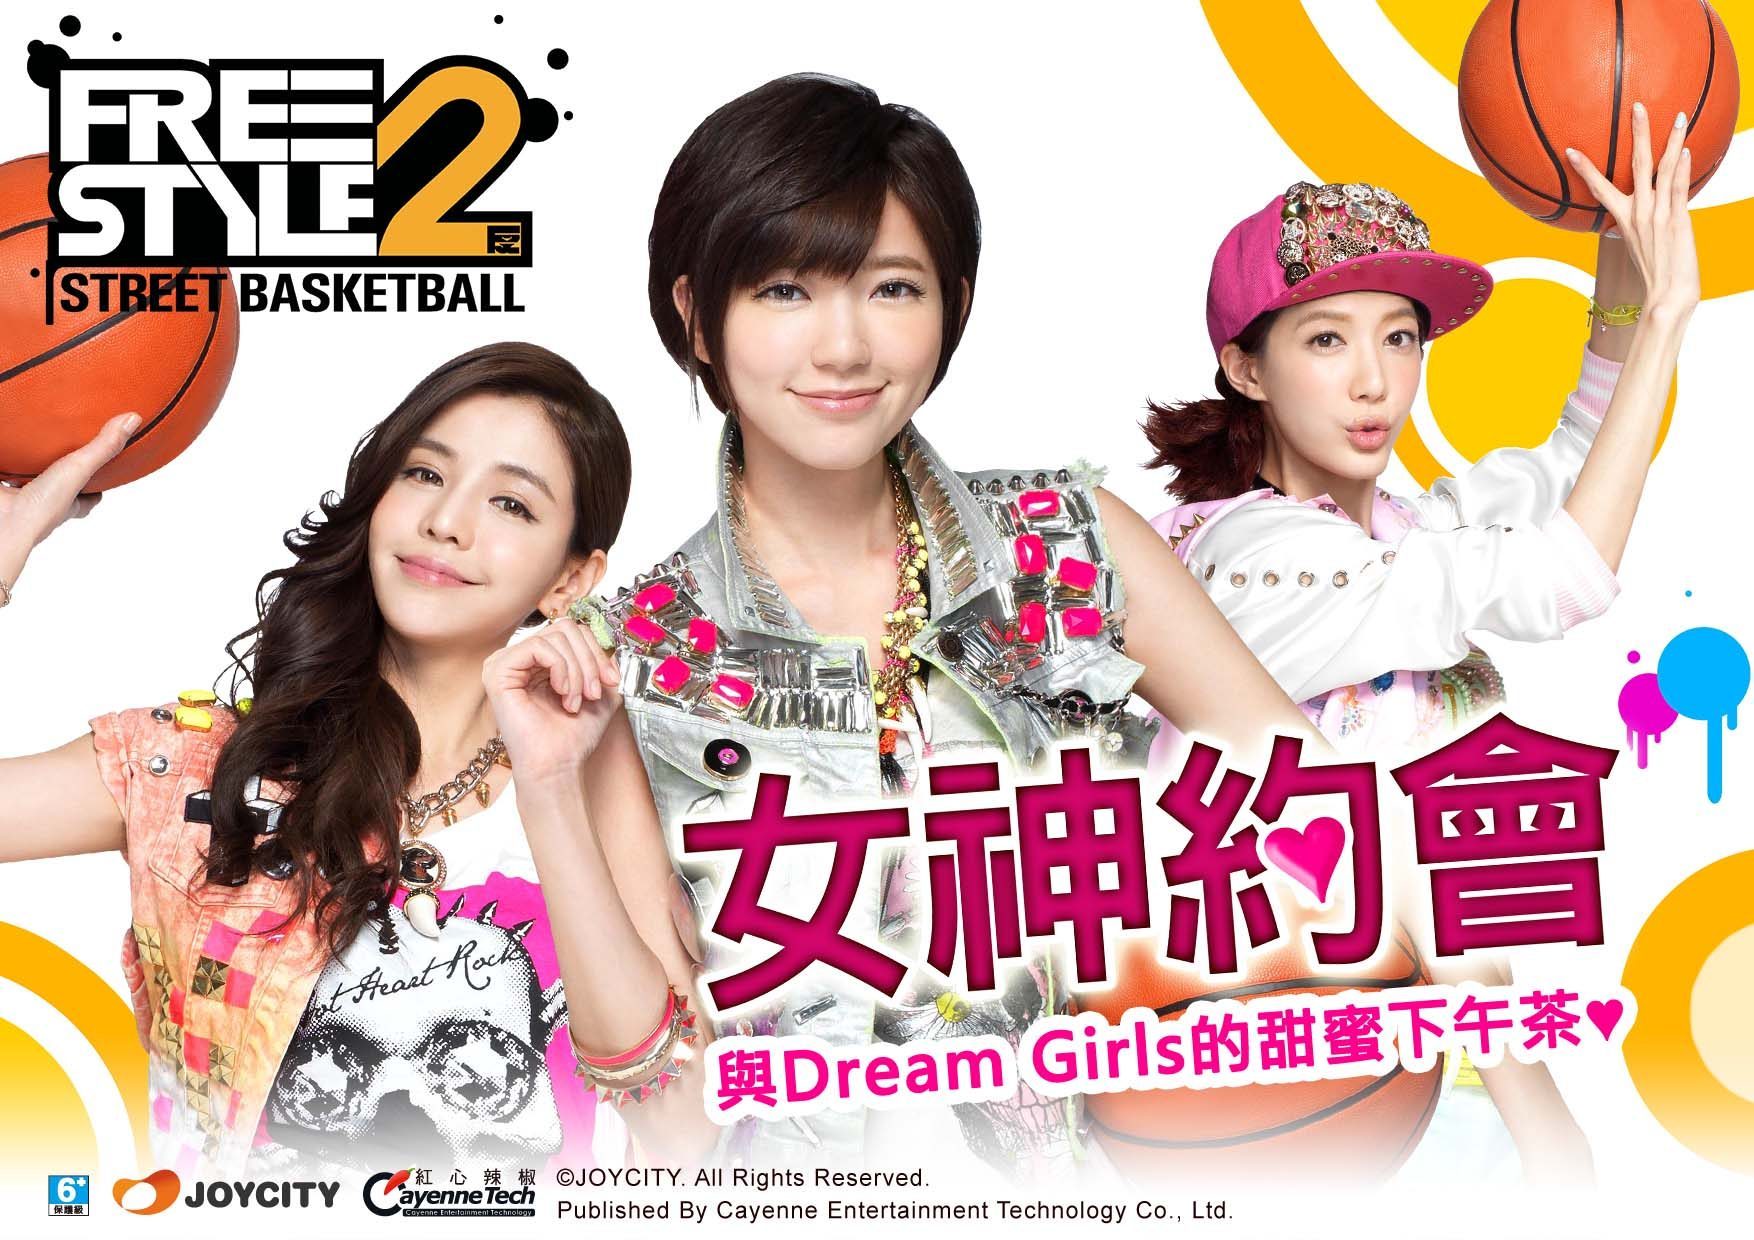 《FREE STYLE2 Online》賀佳績，Dream Girls 與玩家約會玩很大  High翻全場！